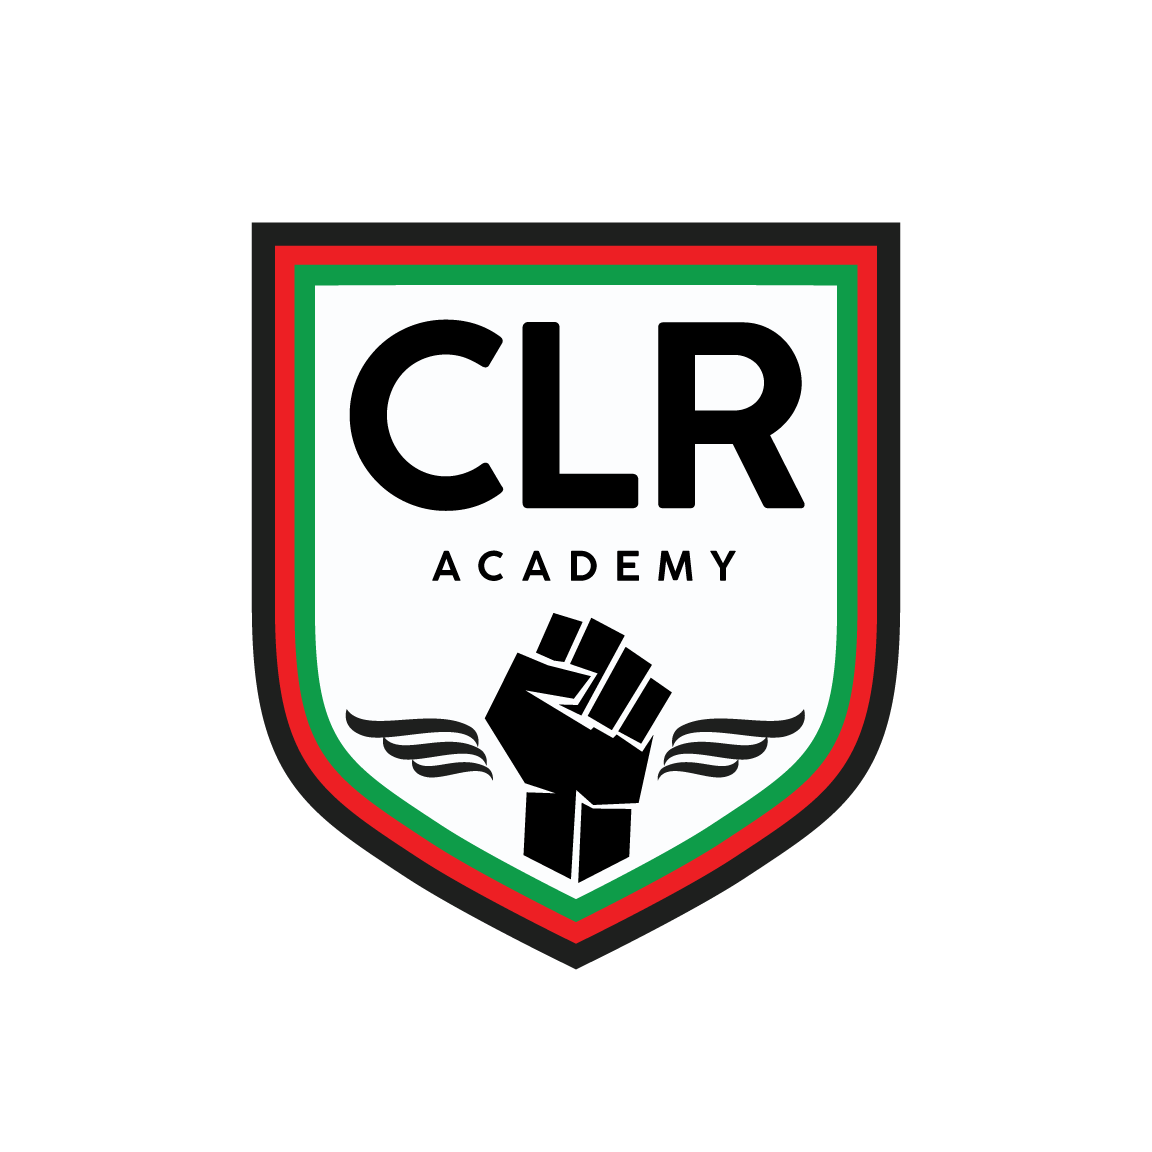 CLR Academy